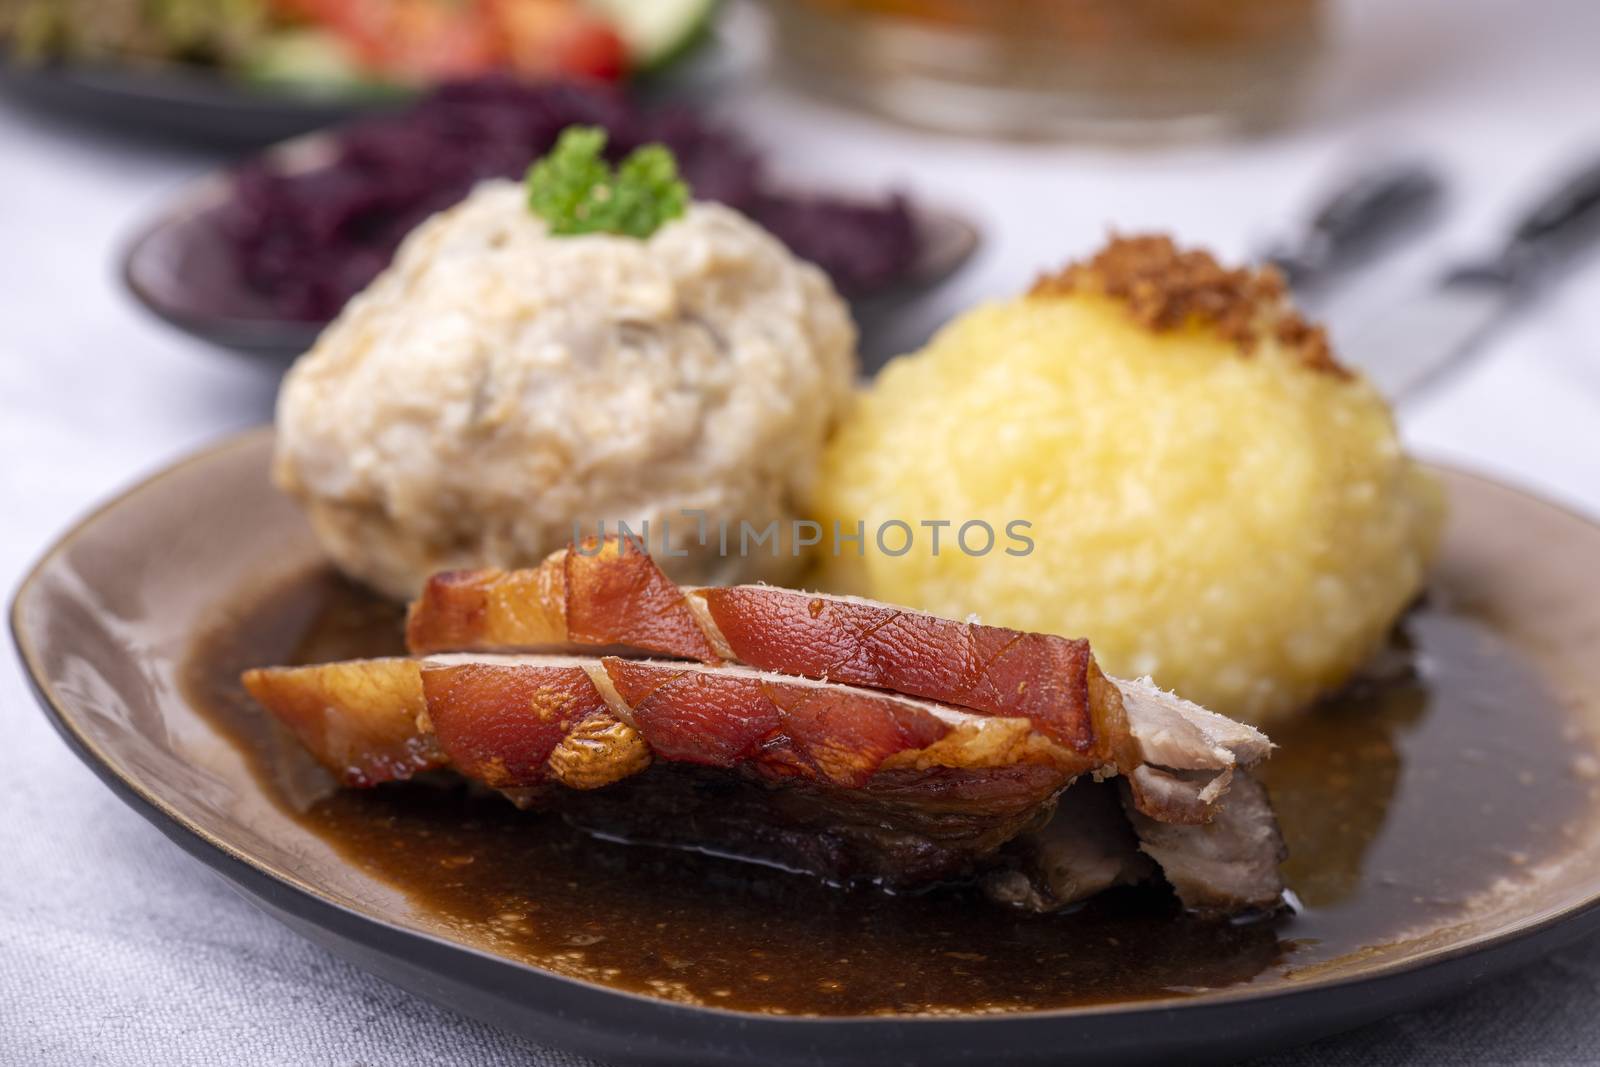 bavarian roasted pork with different dumplings